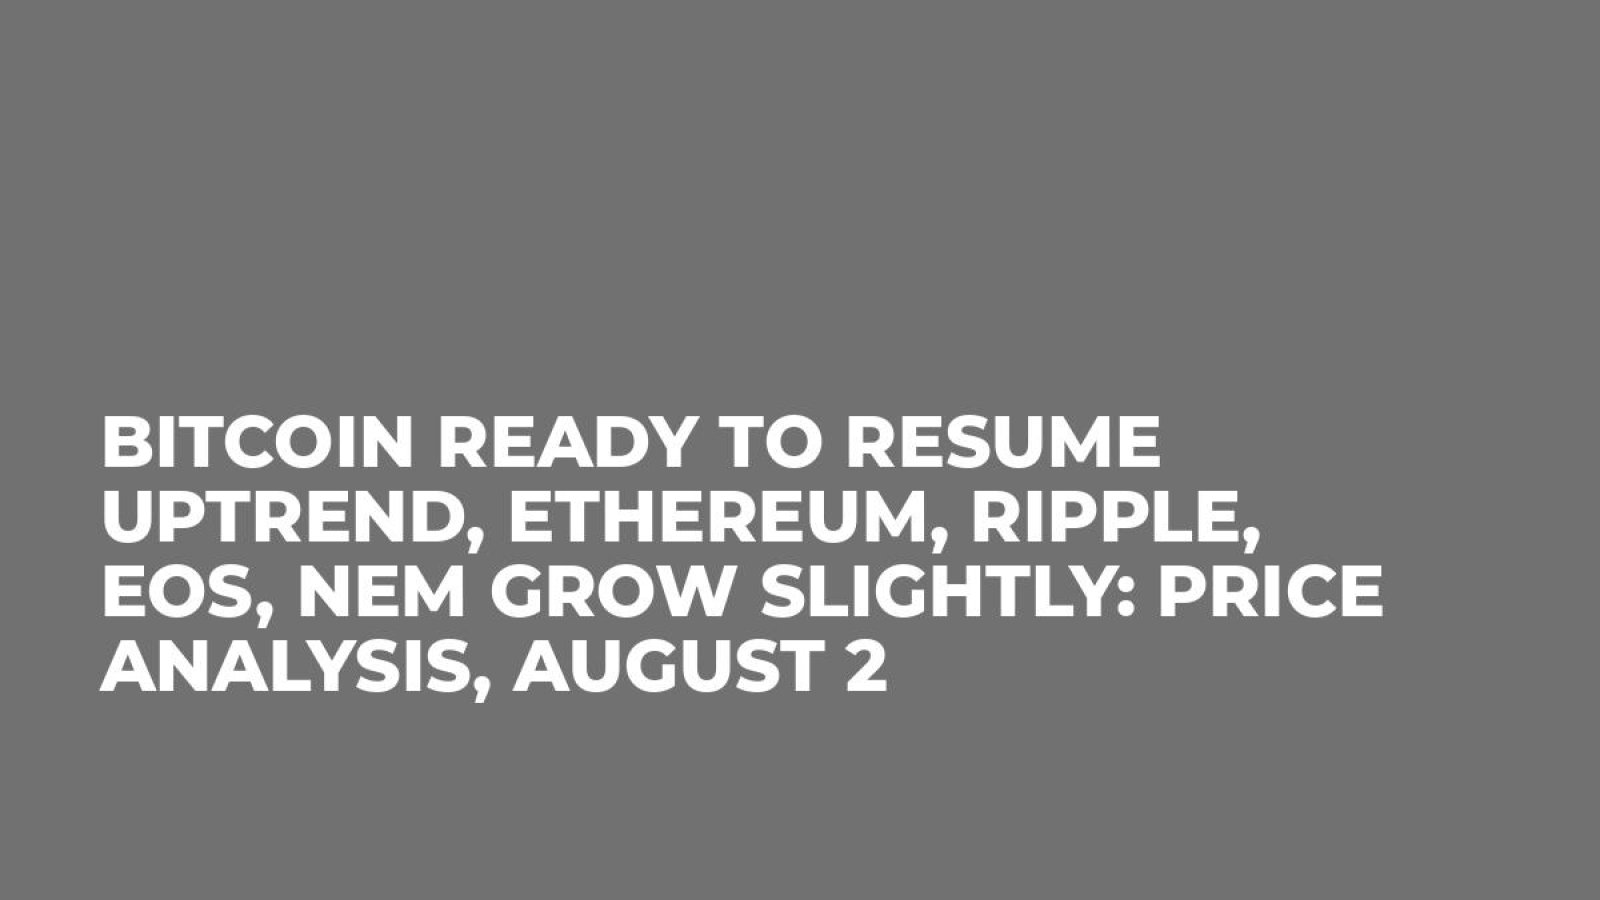 Bitcoin Ready to Resume Uptrend, Ethereum, Ripple, EOS, NEM Grow Slightly: Price Analysis, August 2